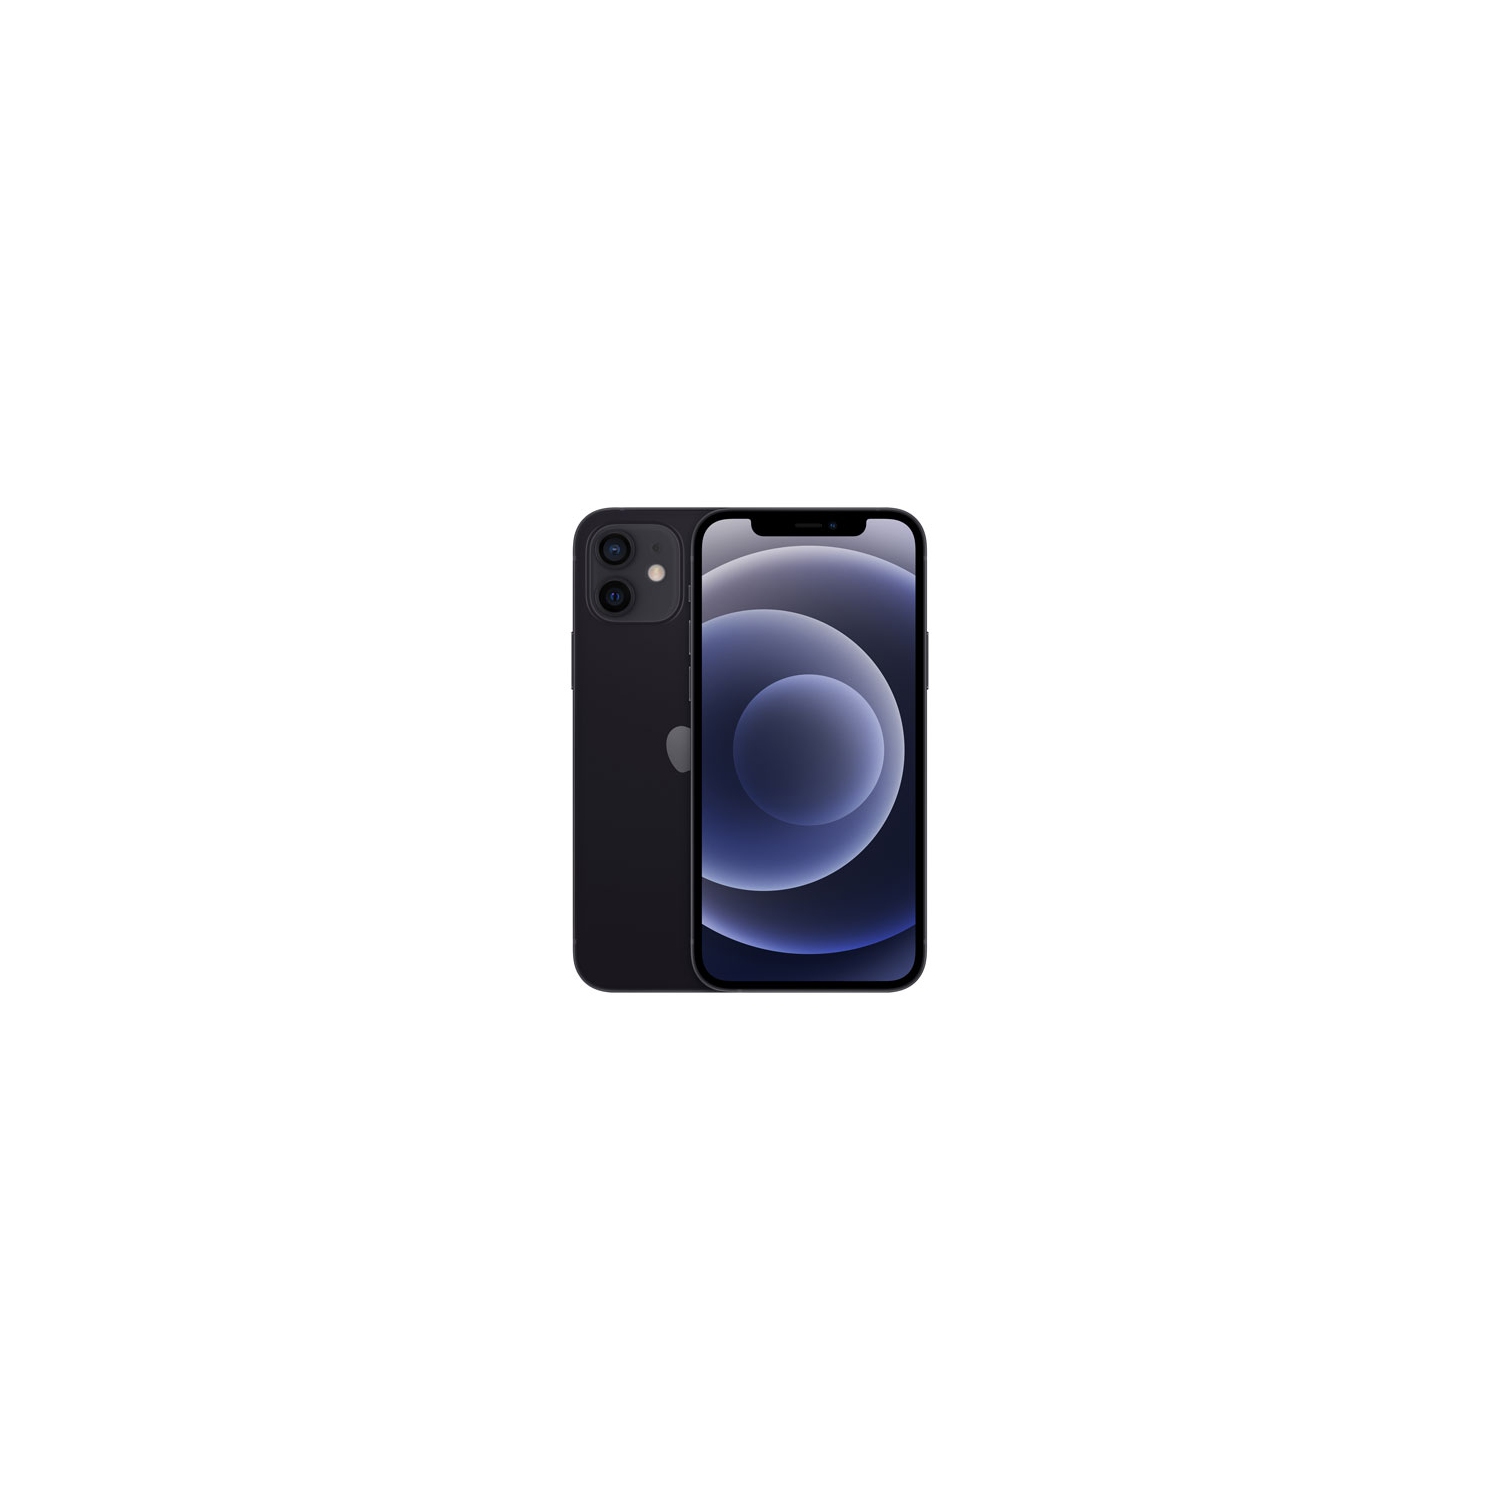 Refurbished (Good) - Apple iPhone 12 128GB Smartphone - Black - Unlocked